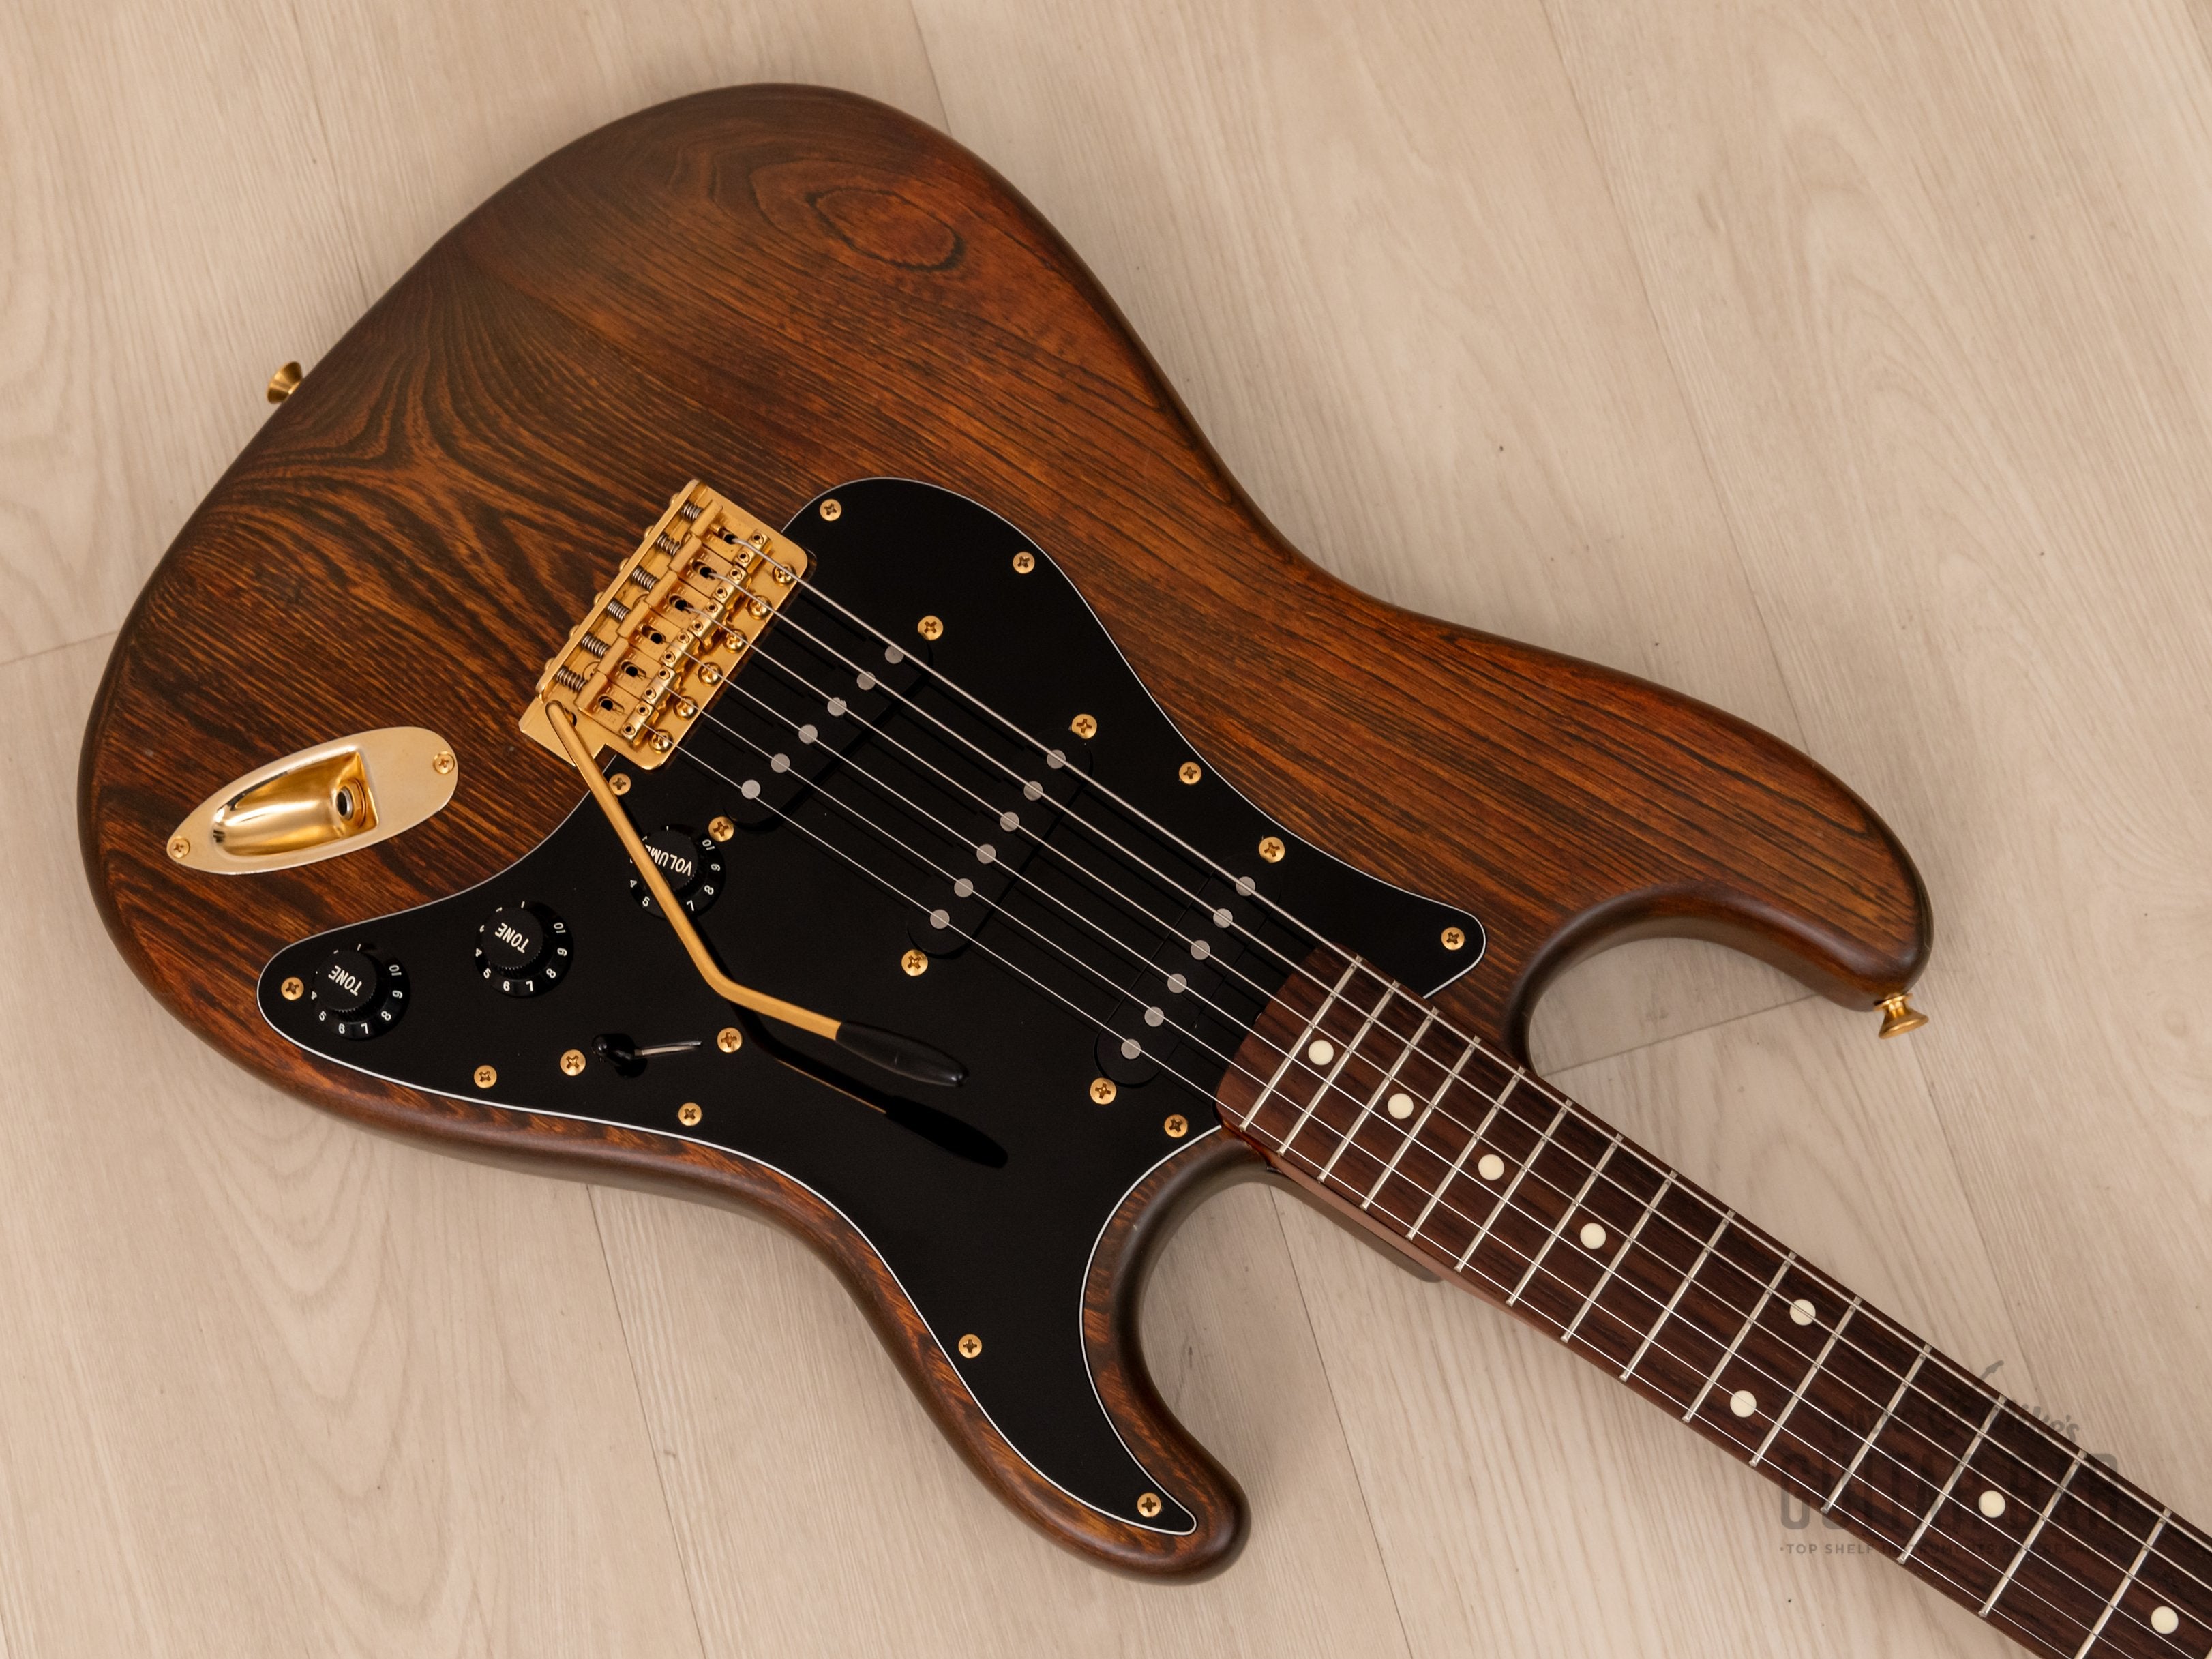 1991 Fender Stratocaster Order Made Walnut Satin Nitro Lacquer w/ Gold Hardware, Japan MIJ Fujigen